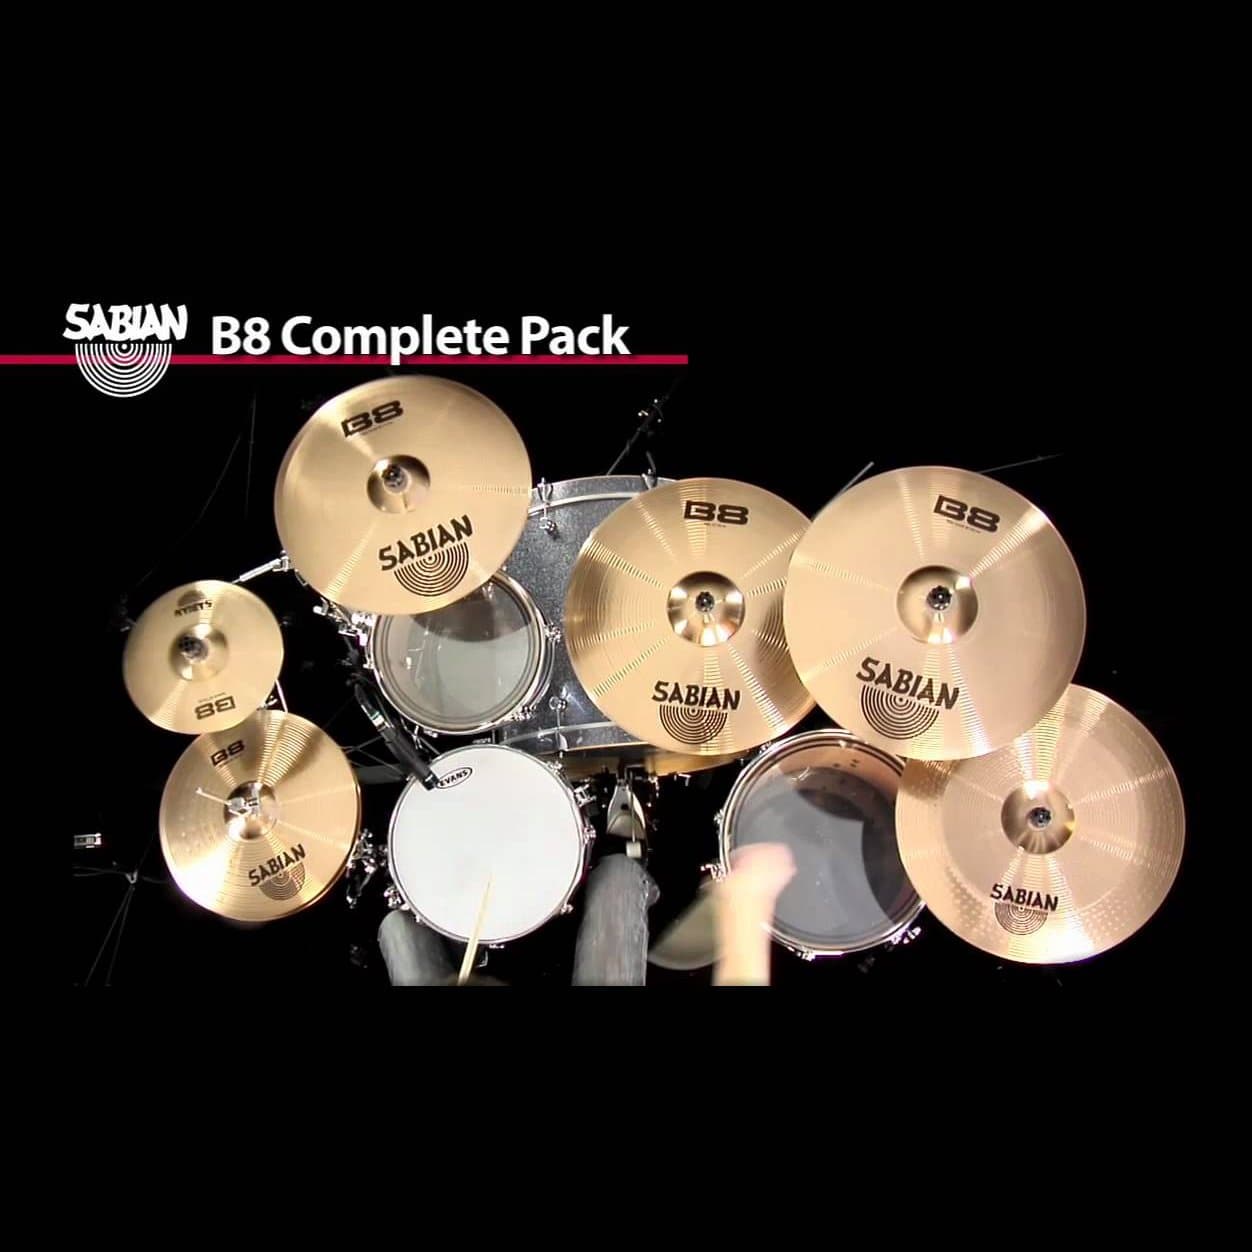 Sabian B8X Rock Ride Cymbal 20